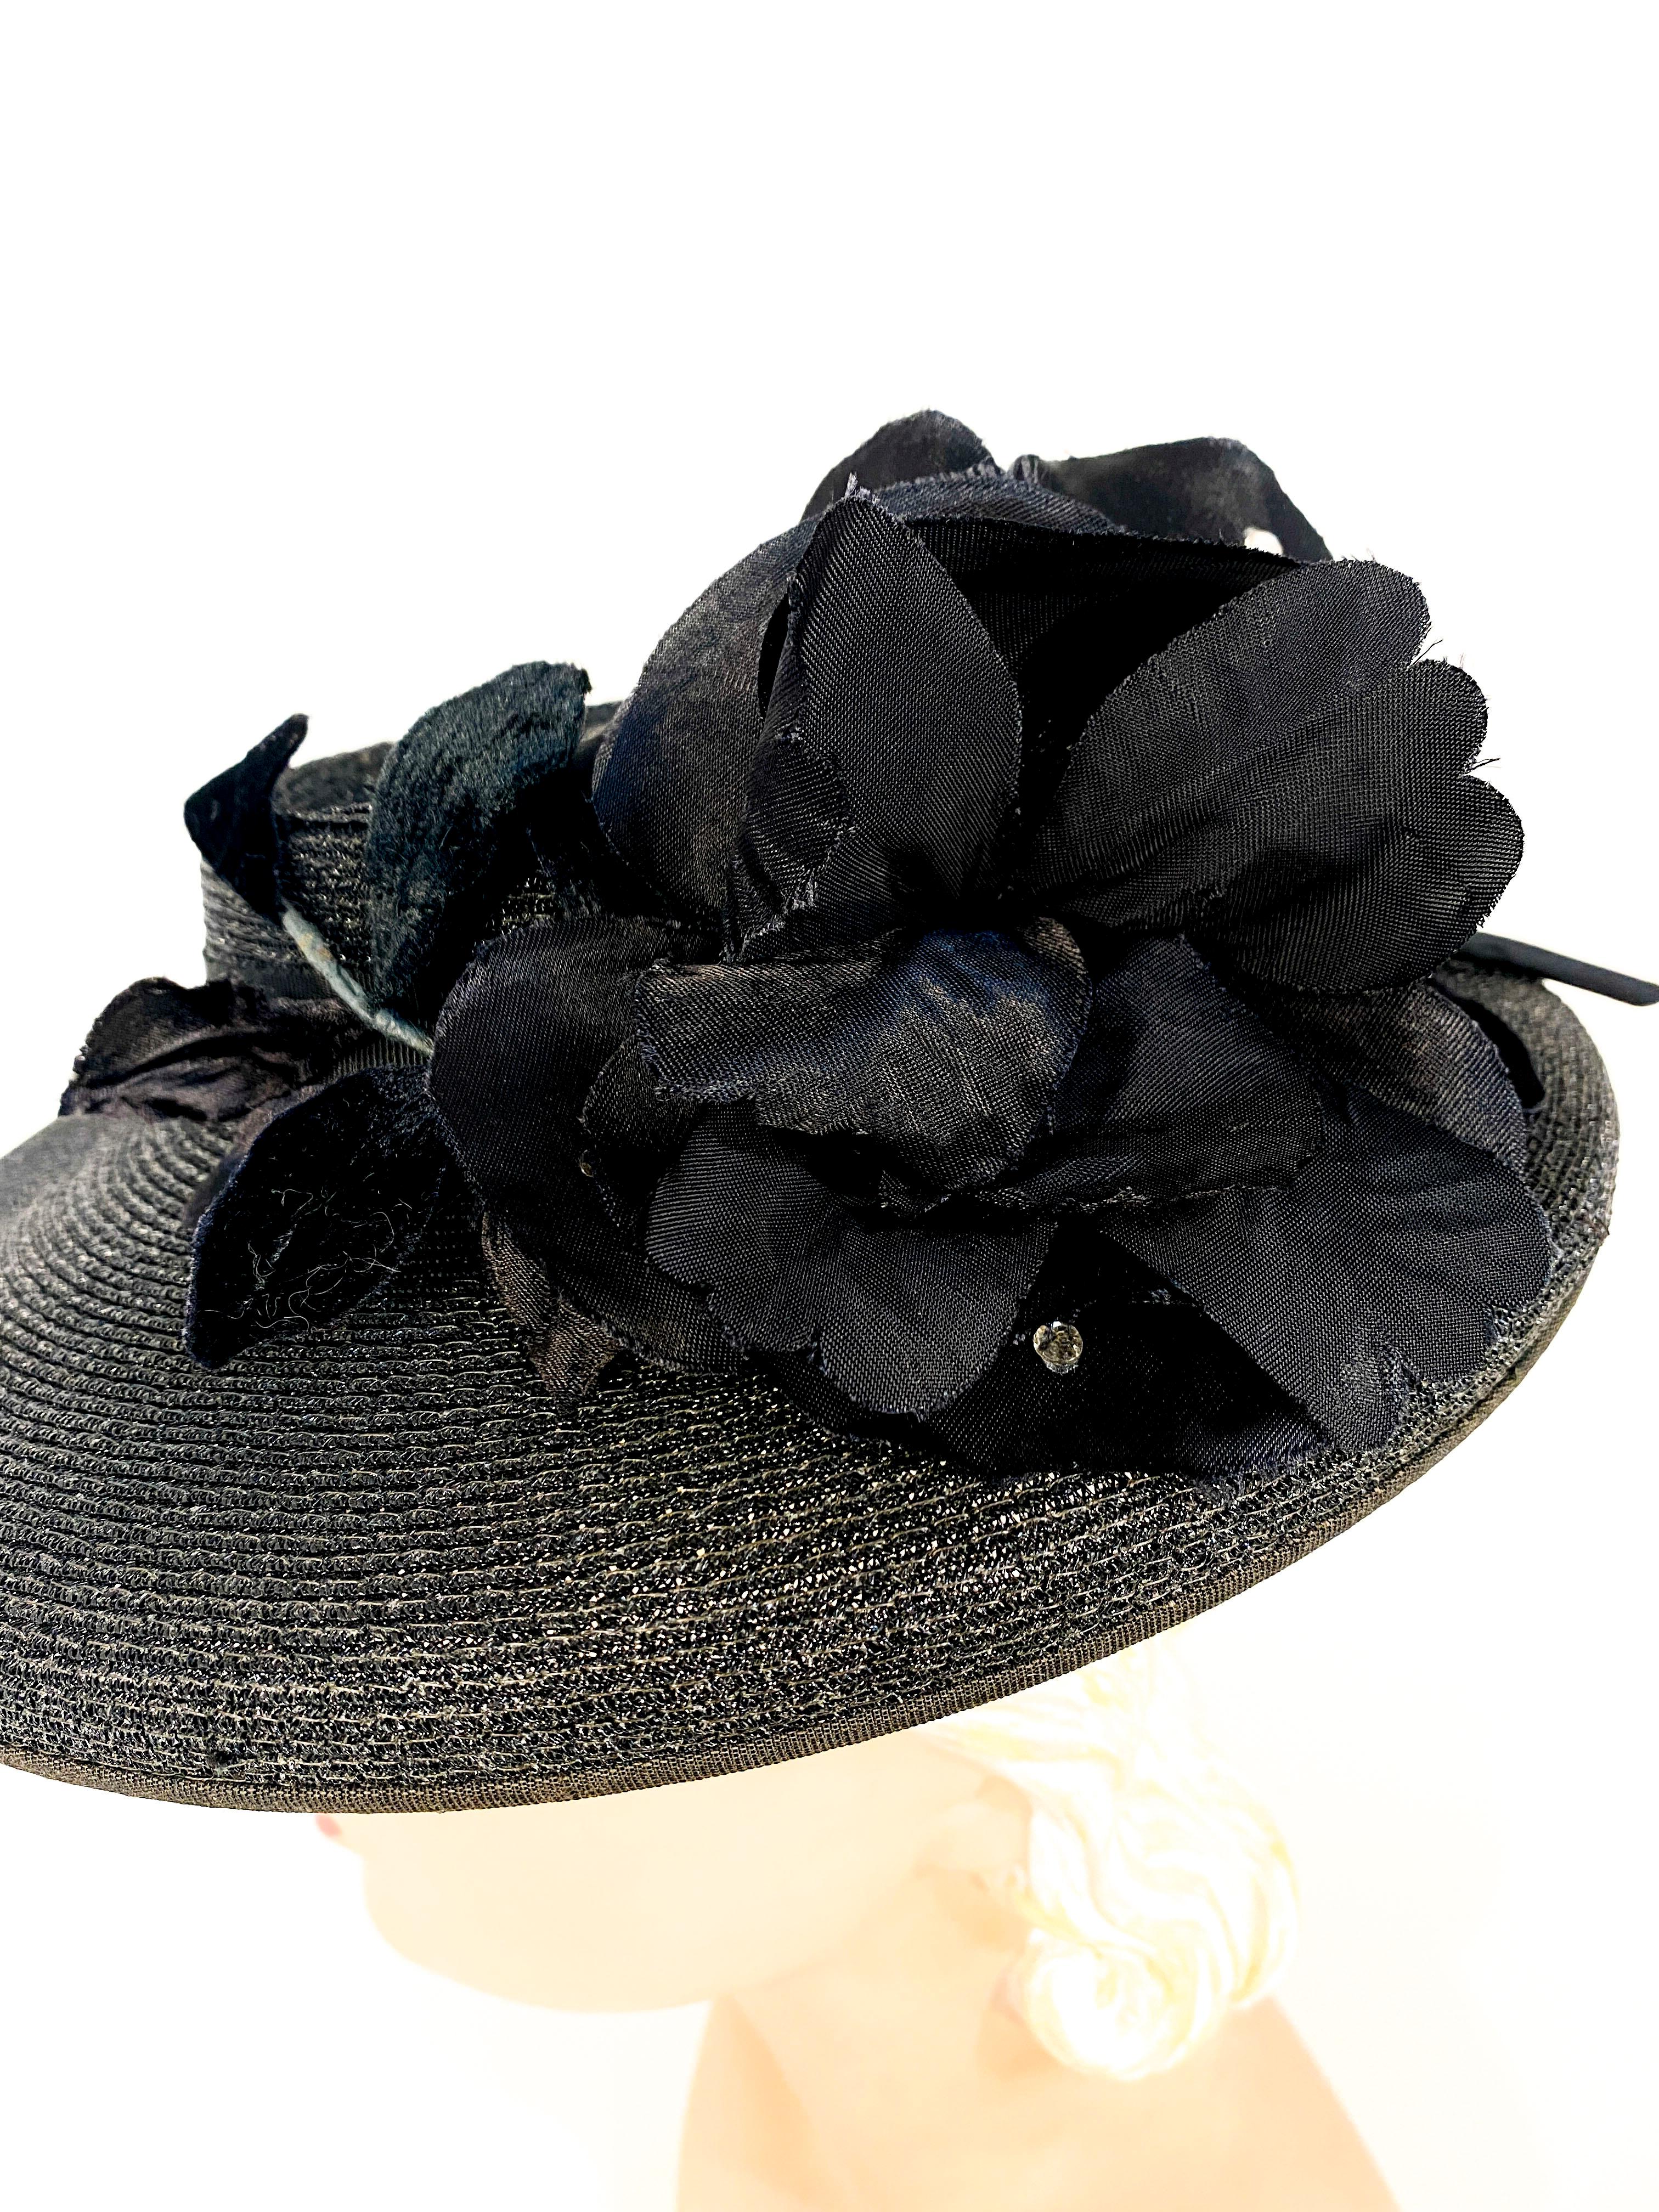 1940s women's hats